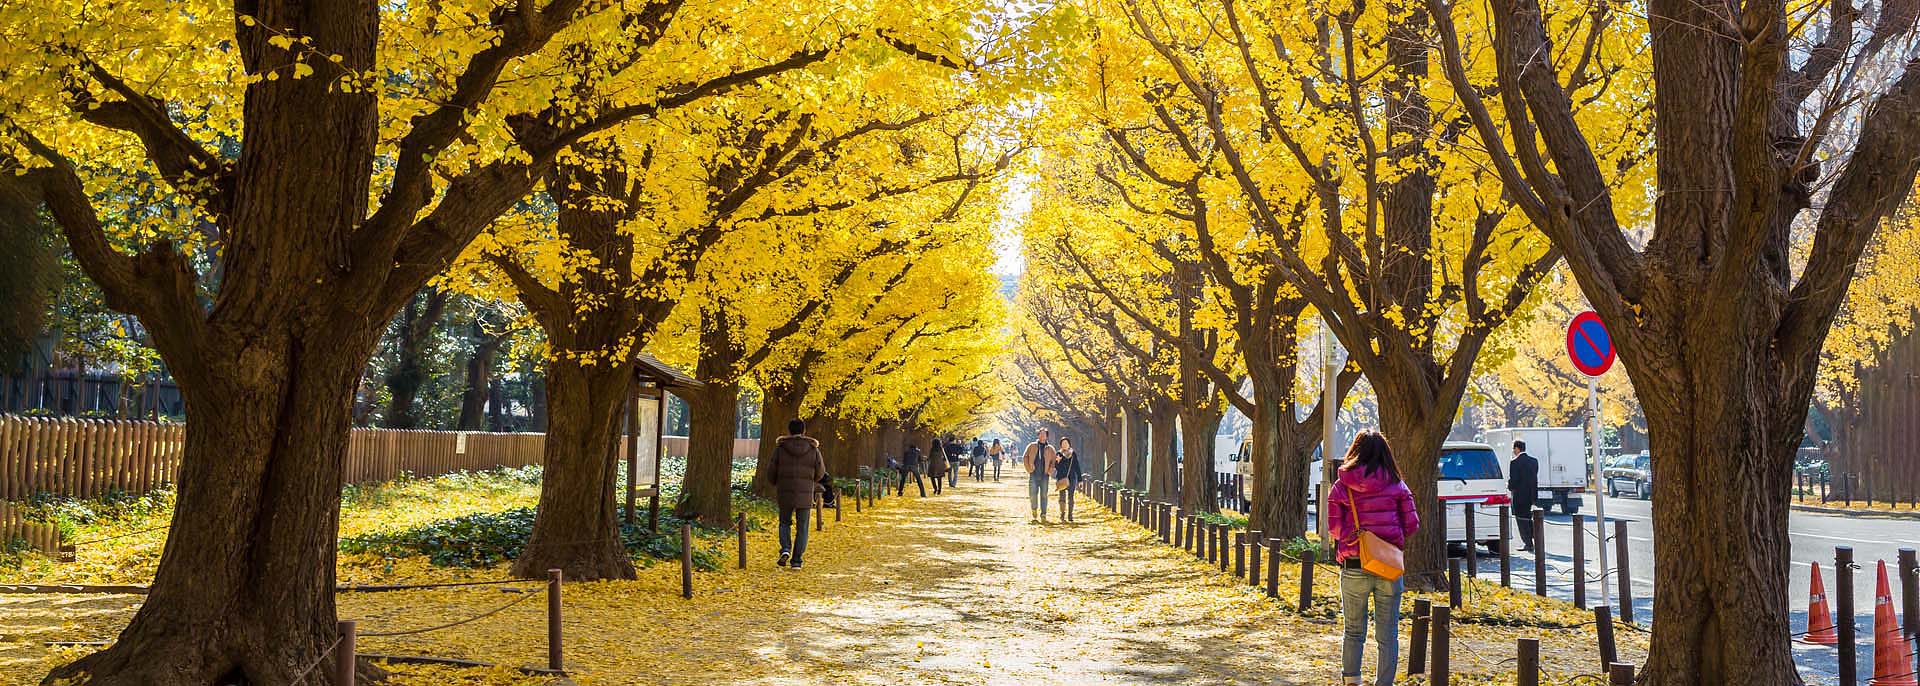 An Avenue of Golden Gingko Trees